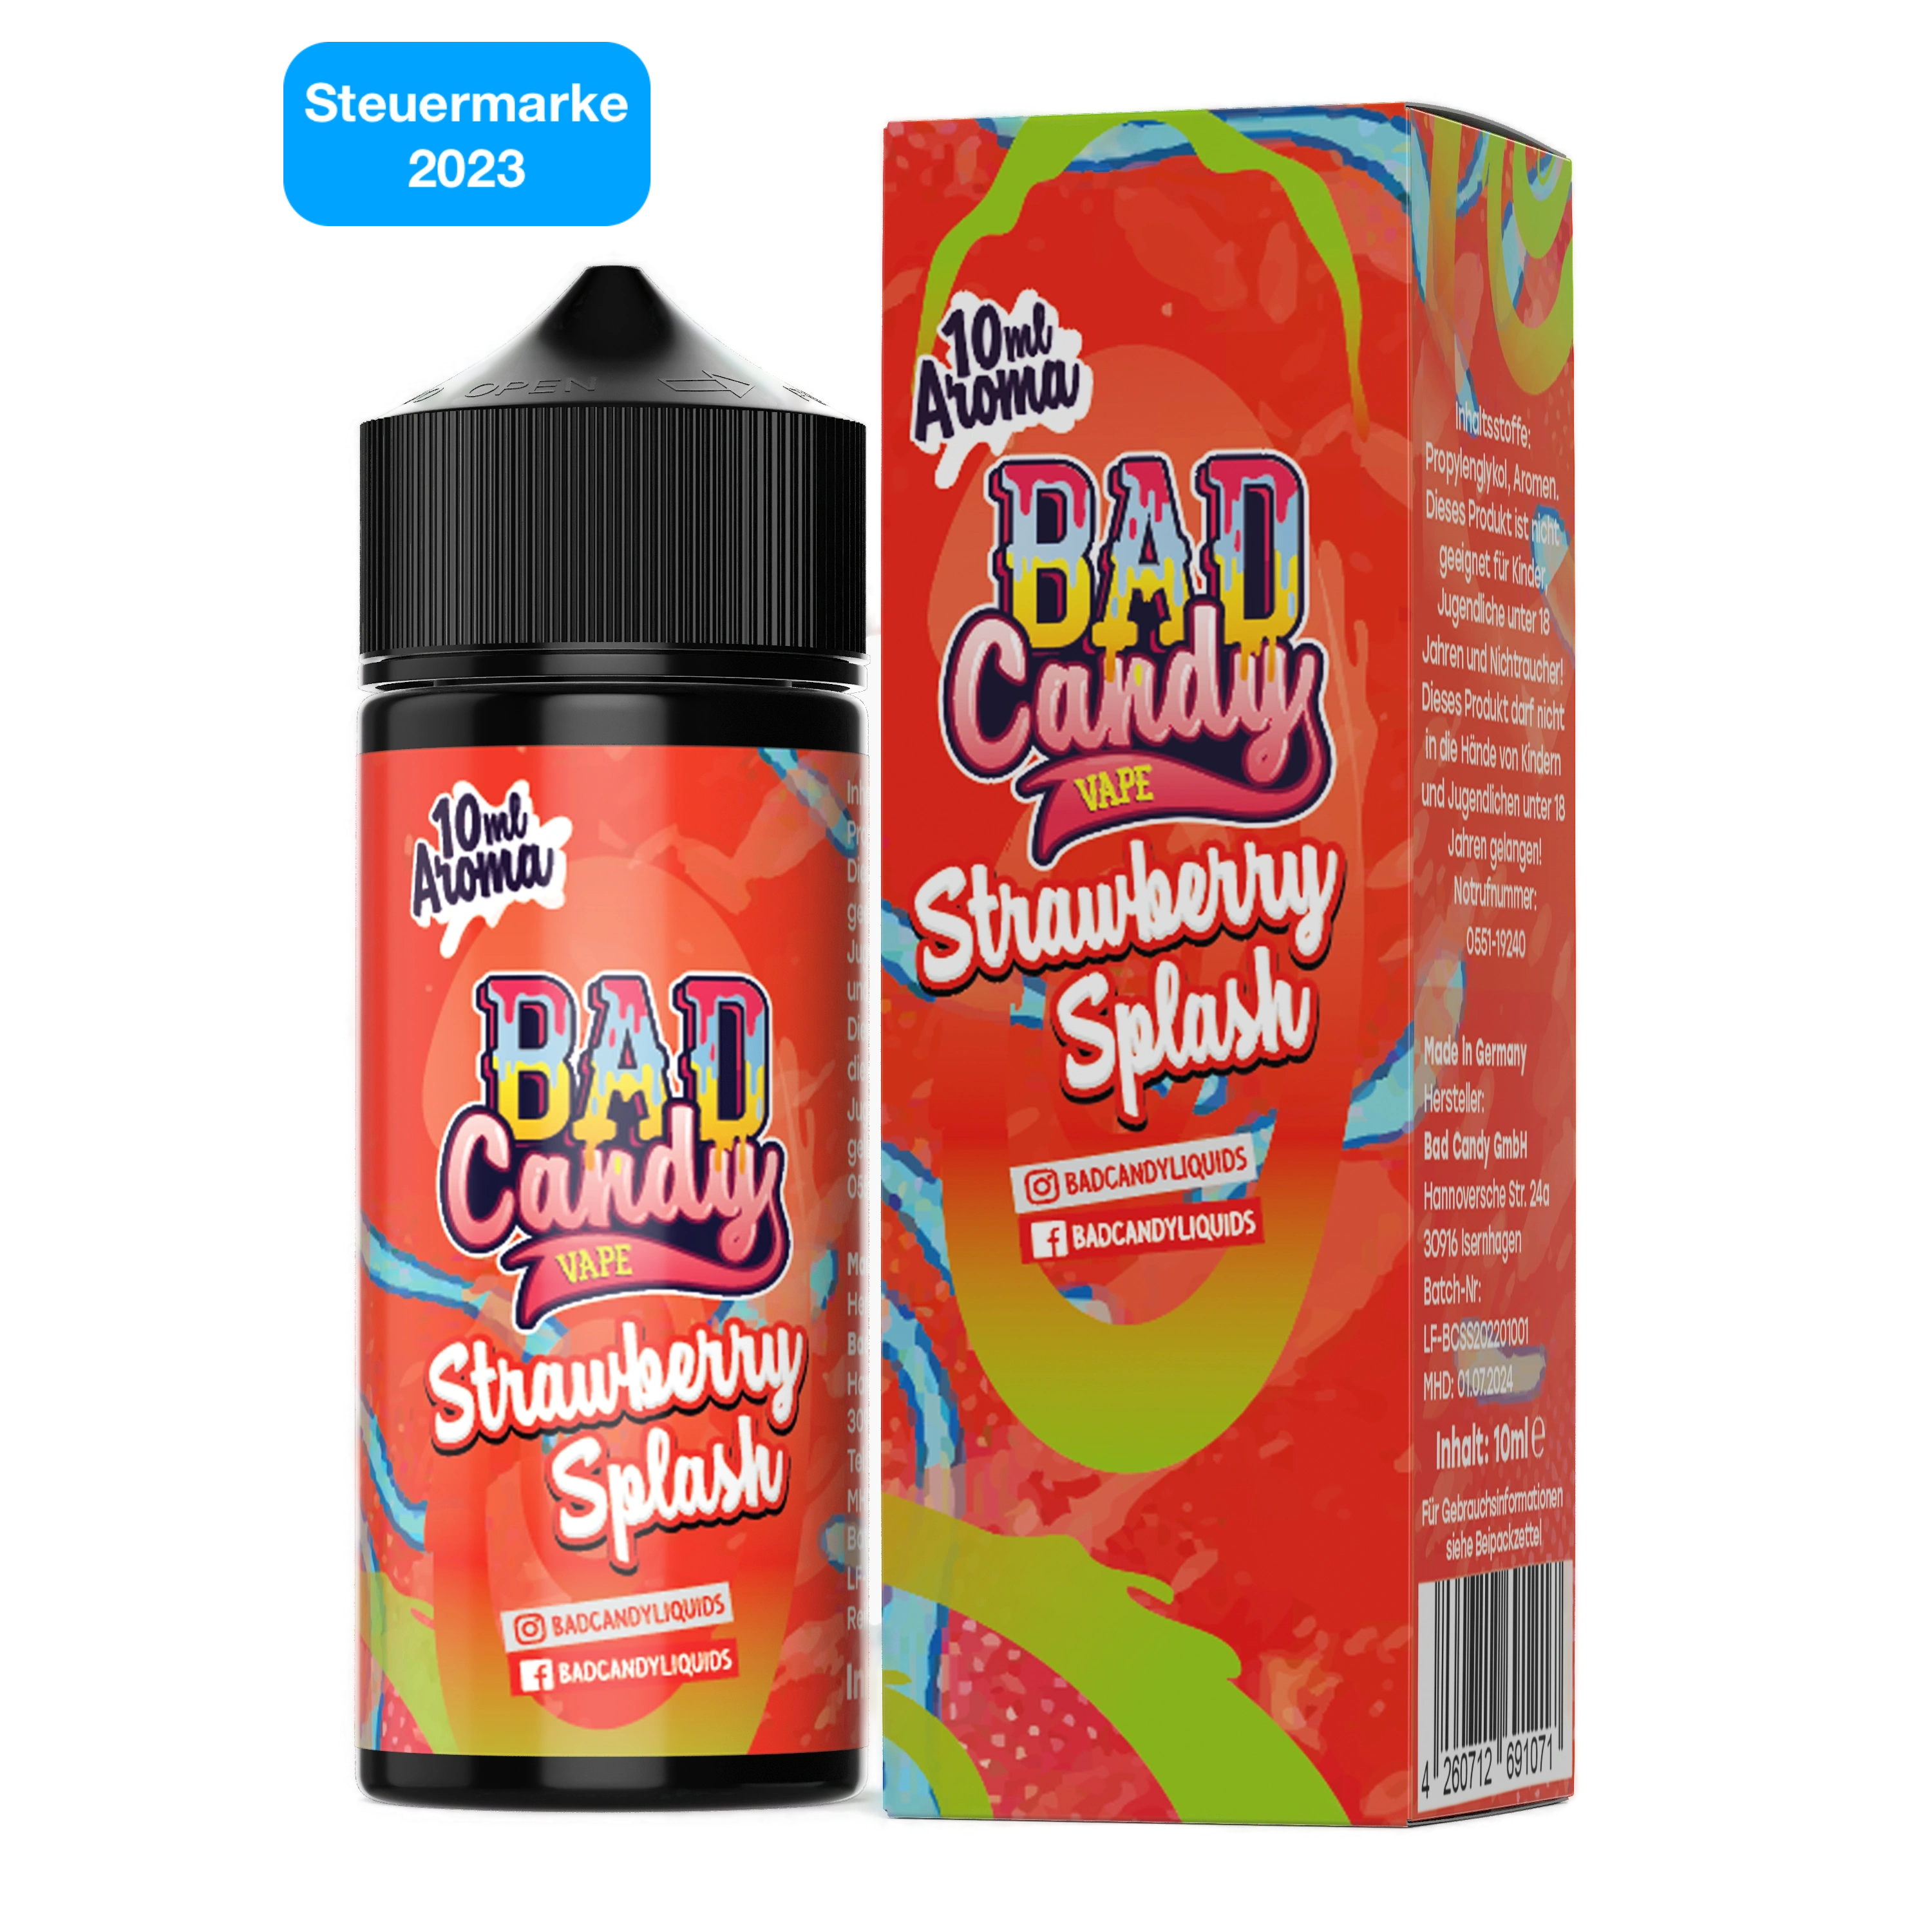 Bad Candy Longfills 10ml Aroma 2023